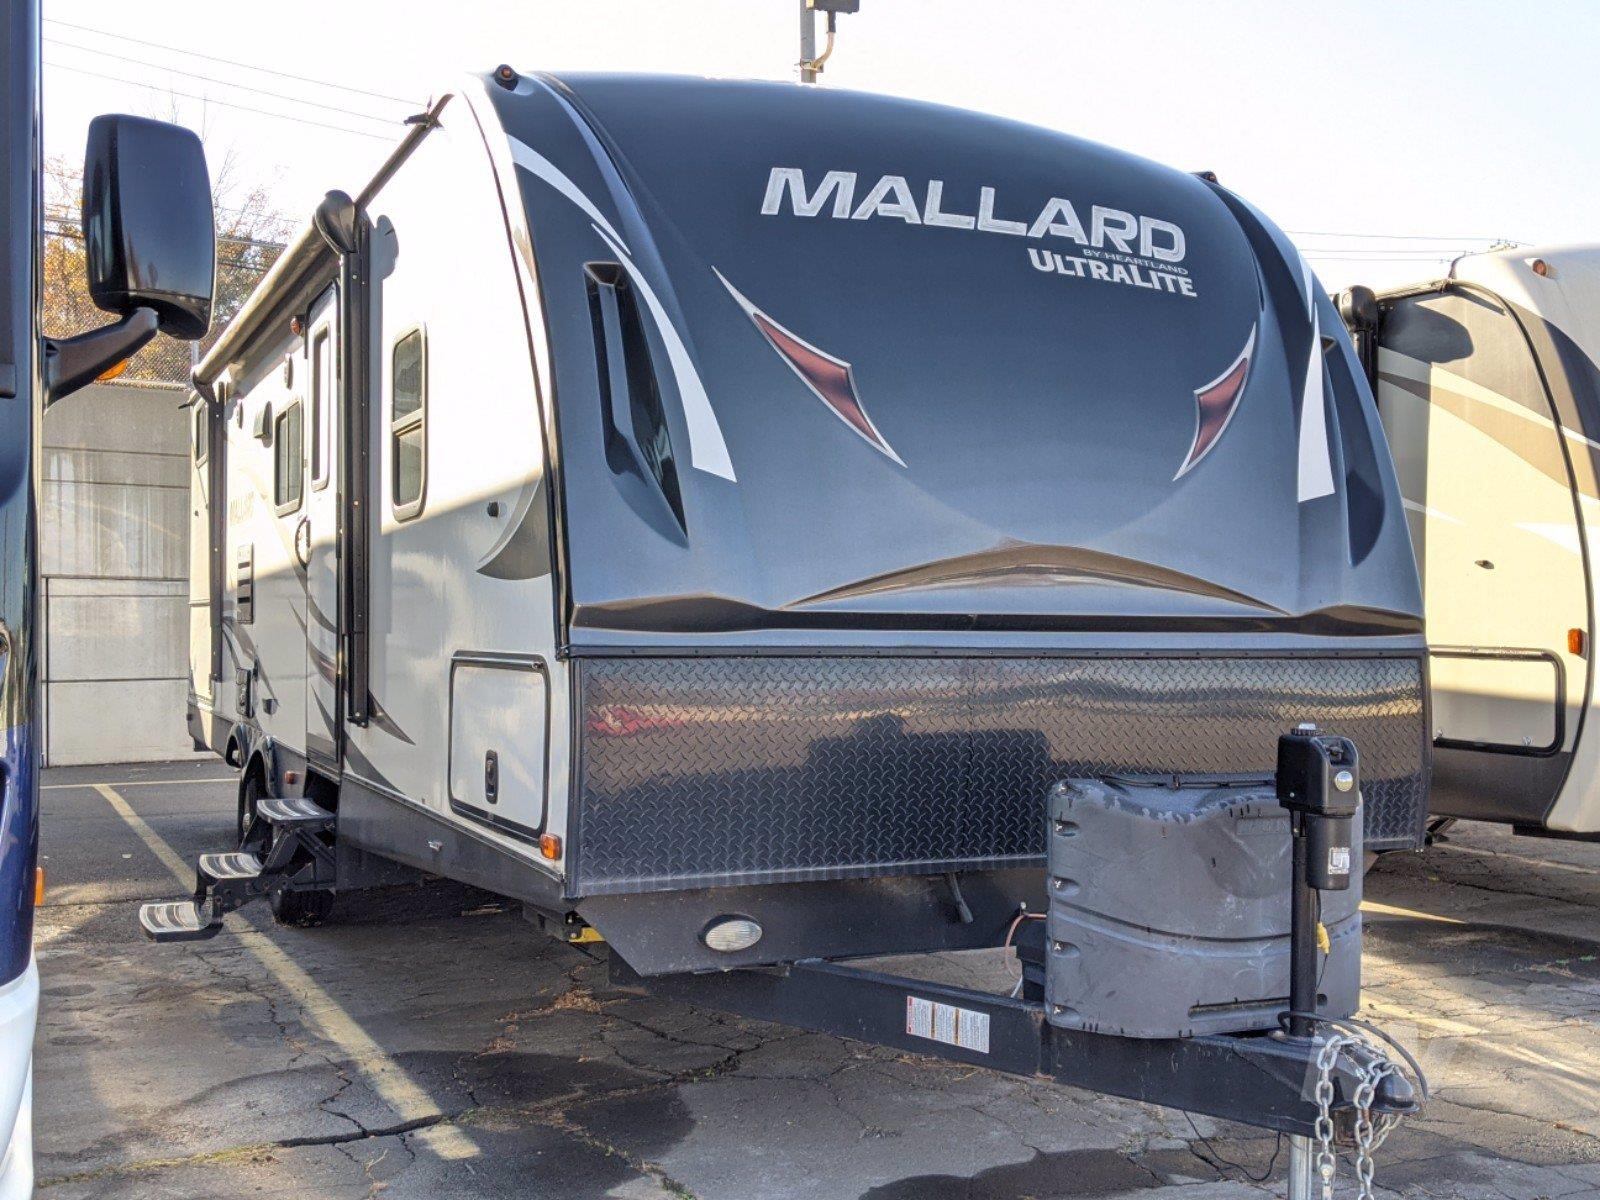 mallard ultralite travel trailer